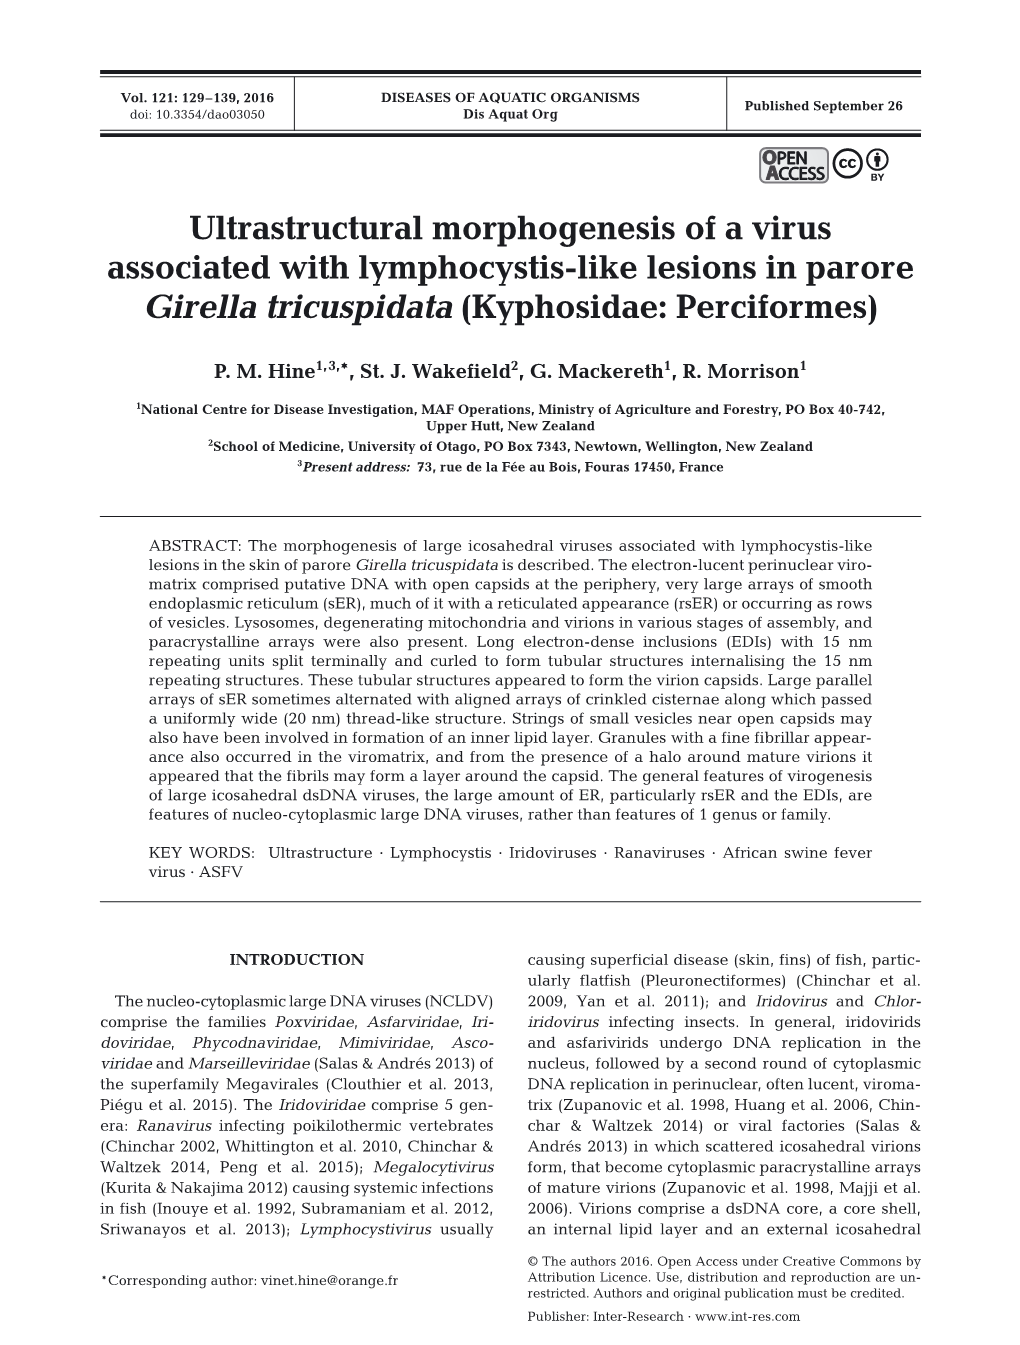 Ultrastructural Morphogenesis of a Virus Associated with Lymphocystis-Like Lesions in Parore Girella Tricuspidata (Kyphosidae: Perciformes)